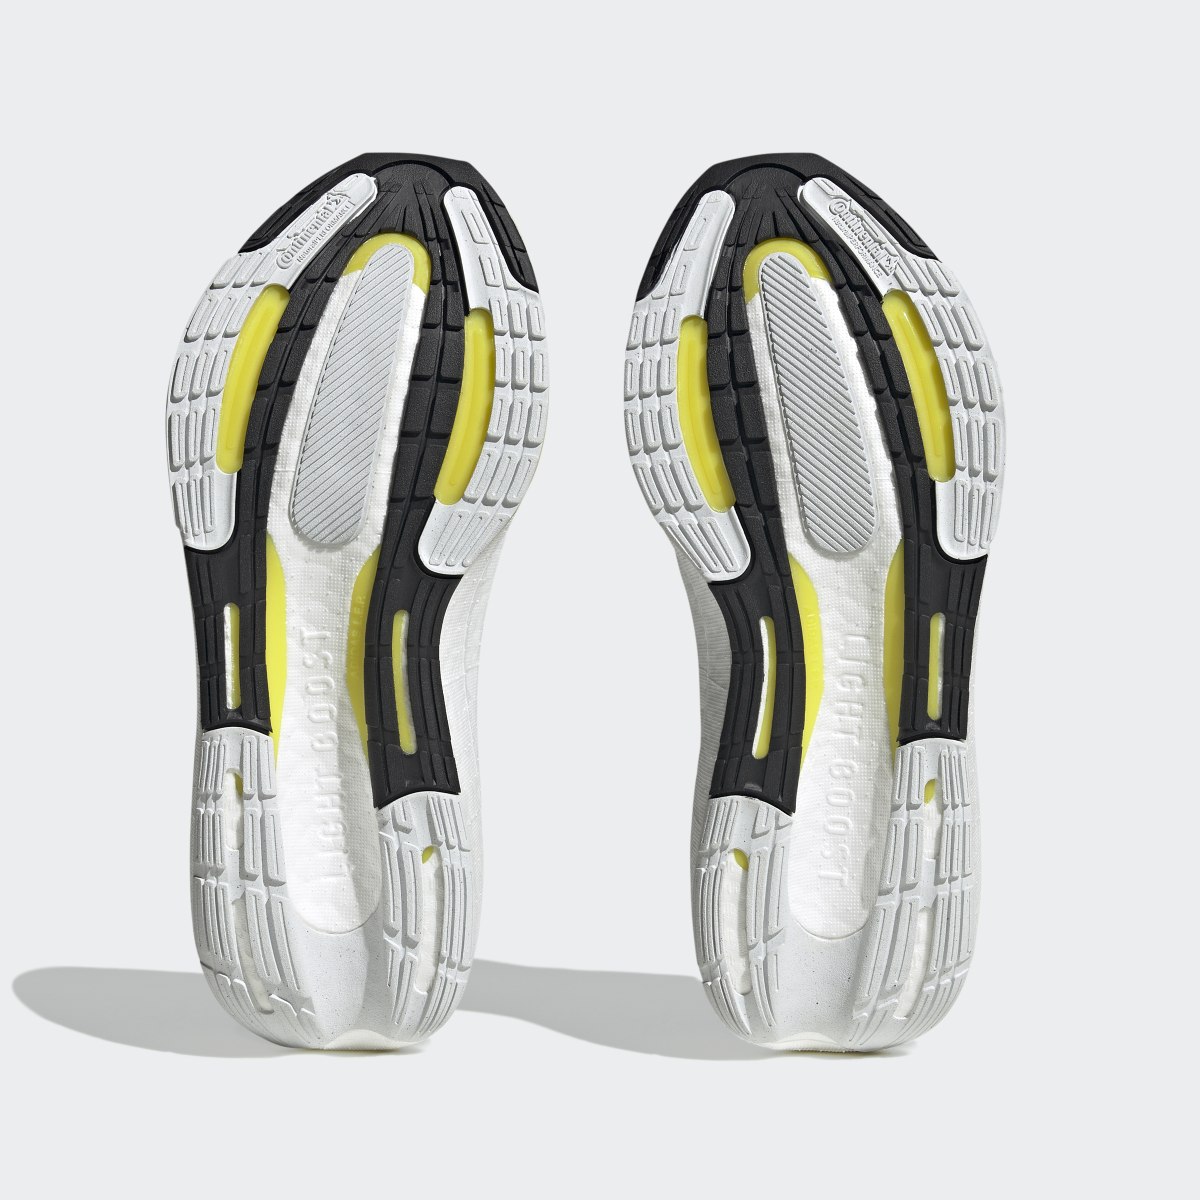 Adidas Ultraboost Light Ayakkabı. 5